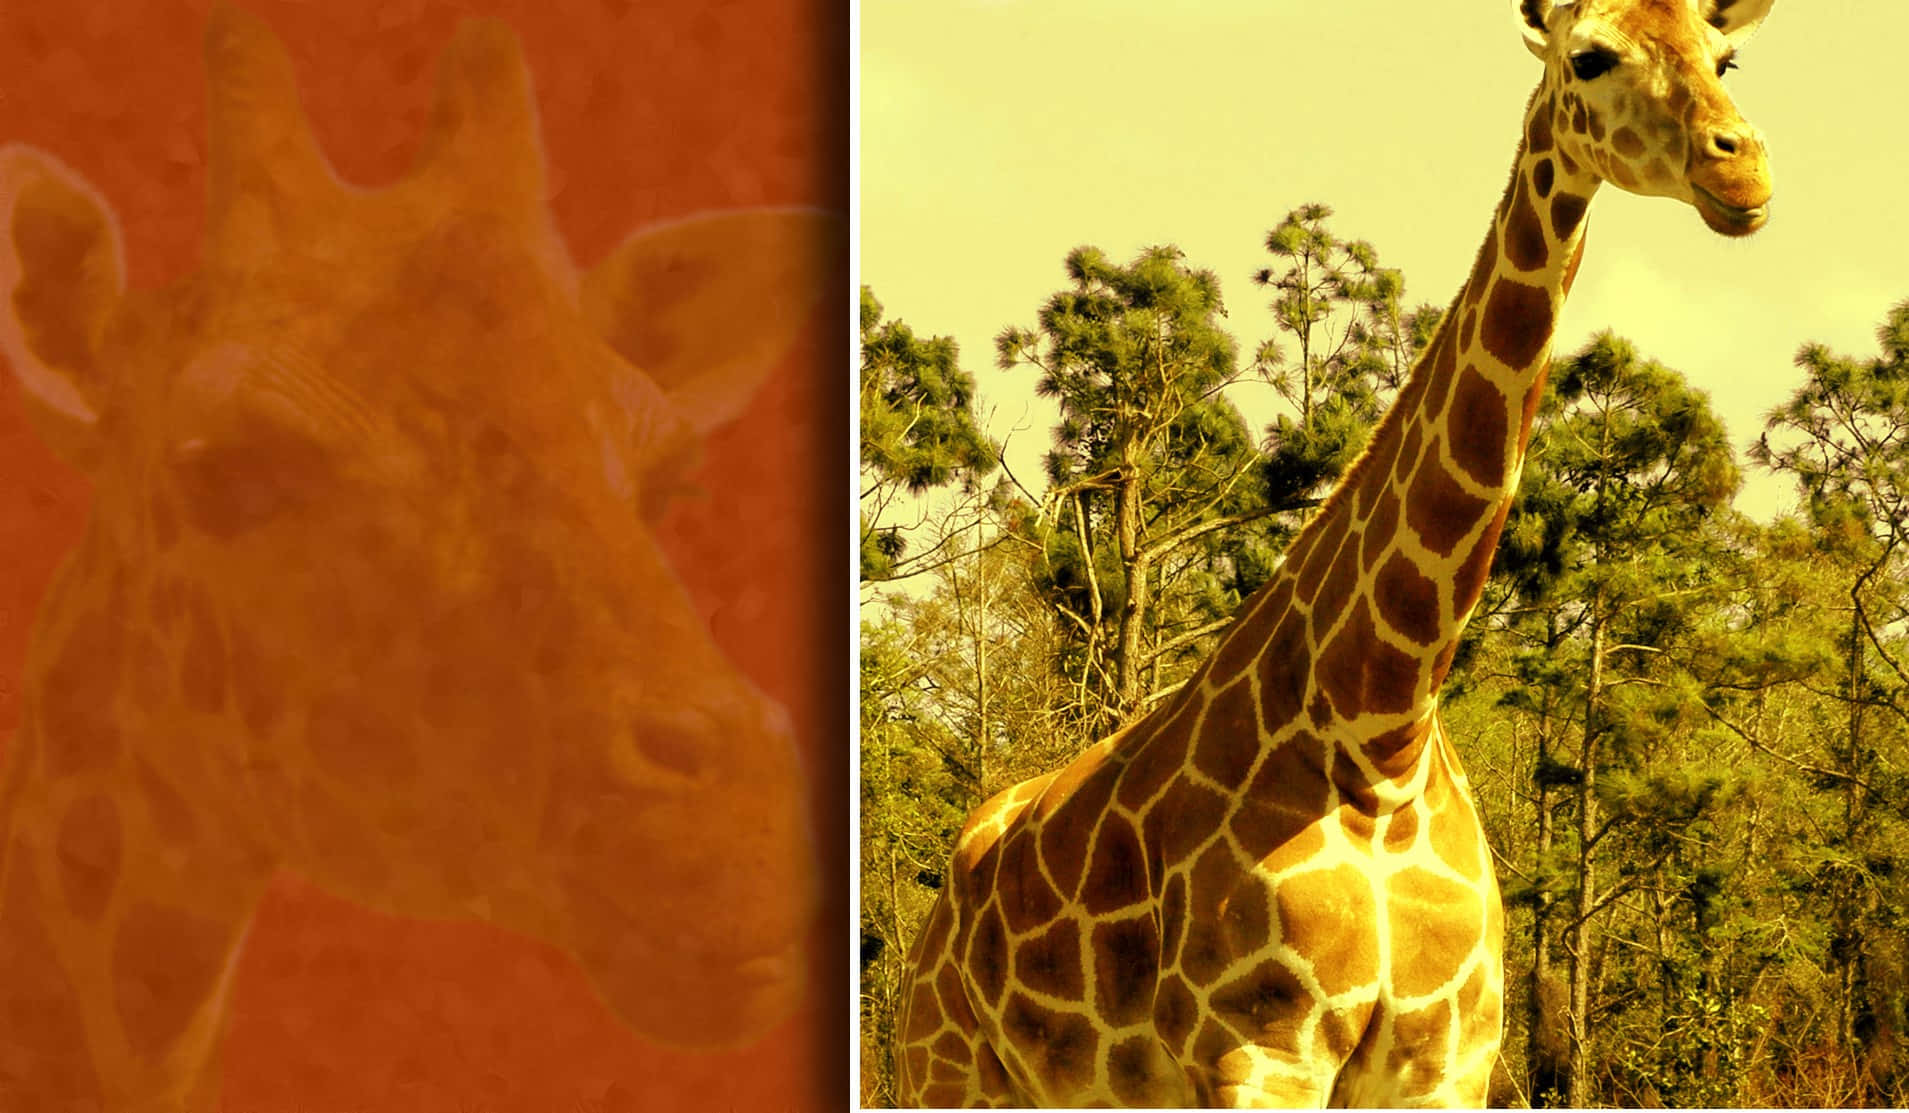 "A massive Giraffe in its natural habitat"